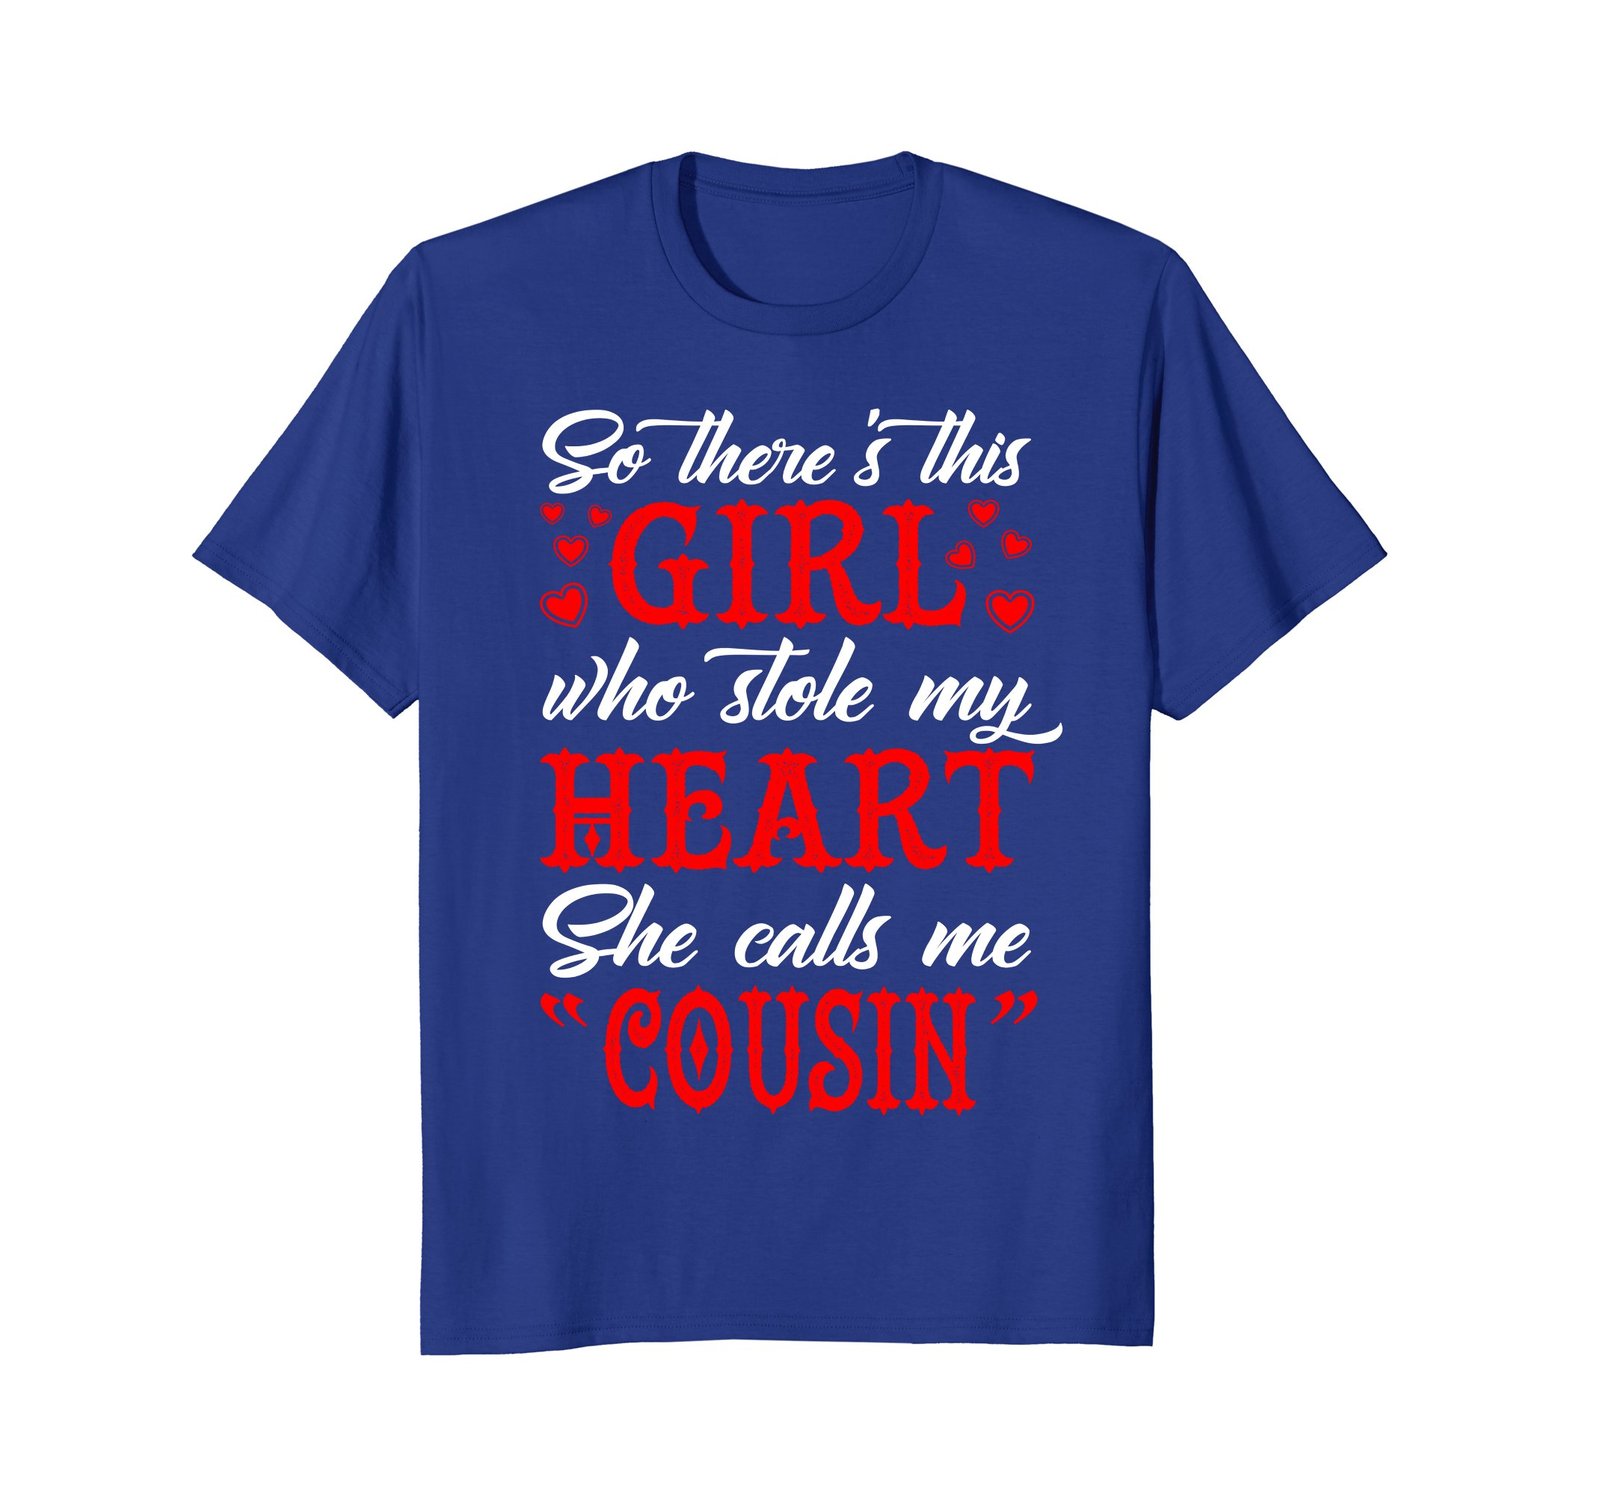 Funny Shirts - Cousin shirt - She Calls Me Cousin Shirt Men - T-Shirts